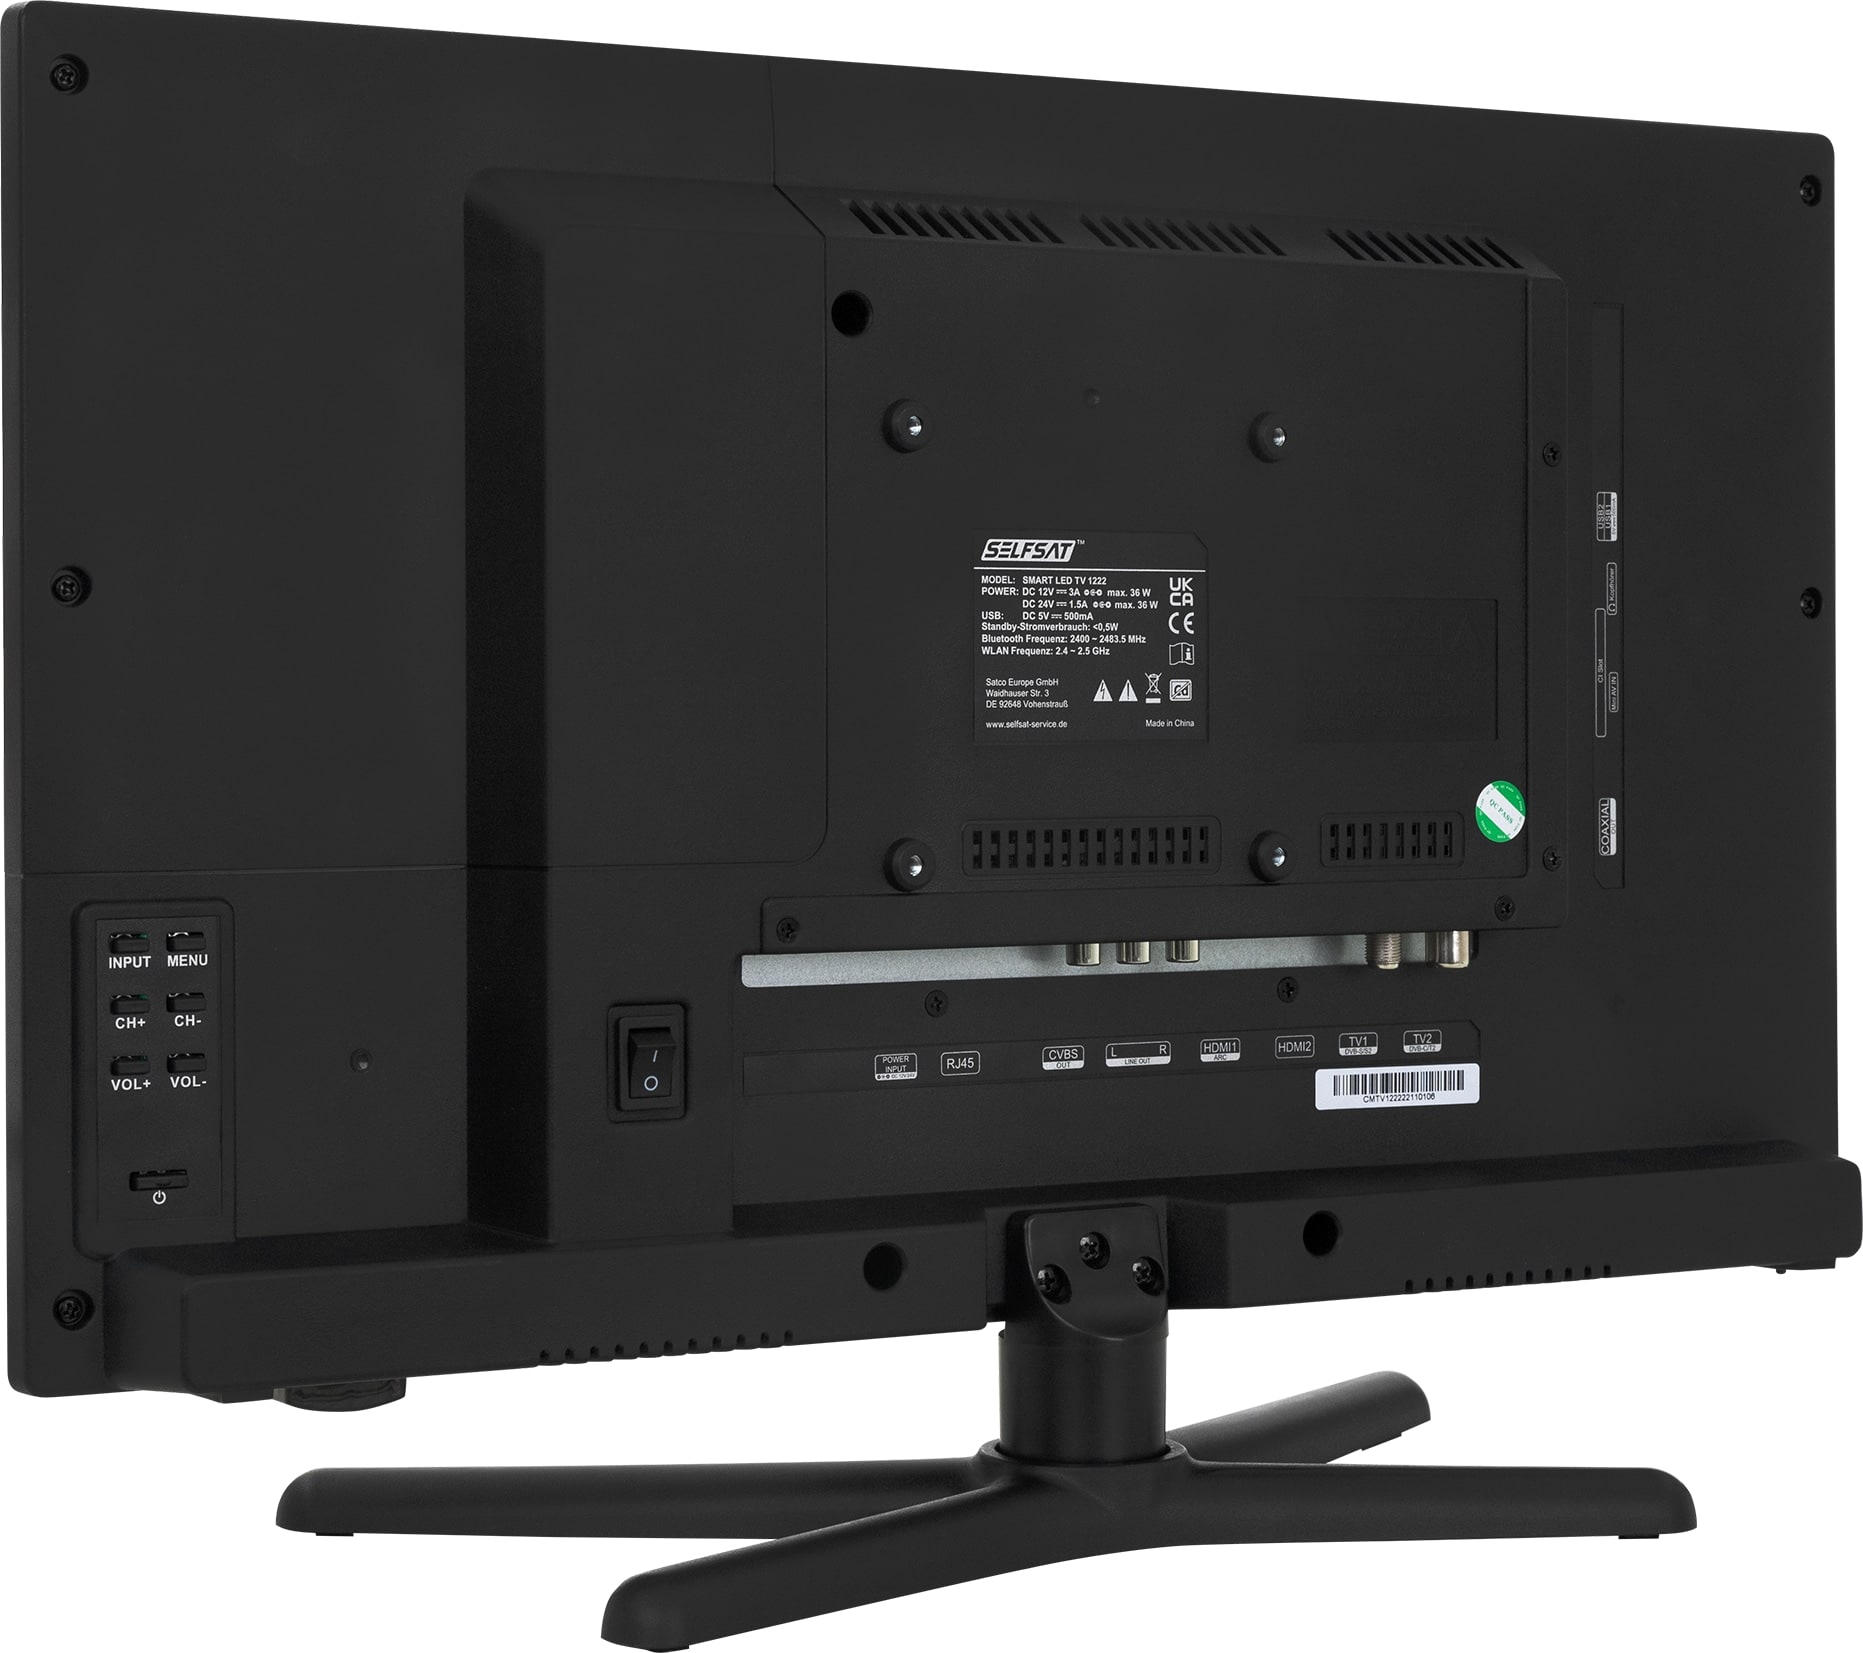 SELFSAT LED-TV Smart 1224, 61 cm (24"), EEK: F, HD-Tuner, WLAN, Bluetooth